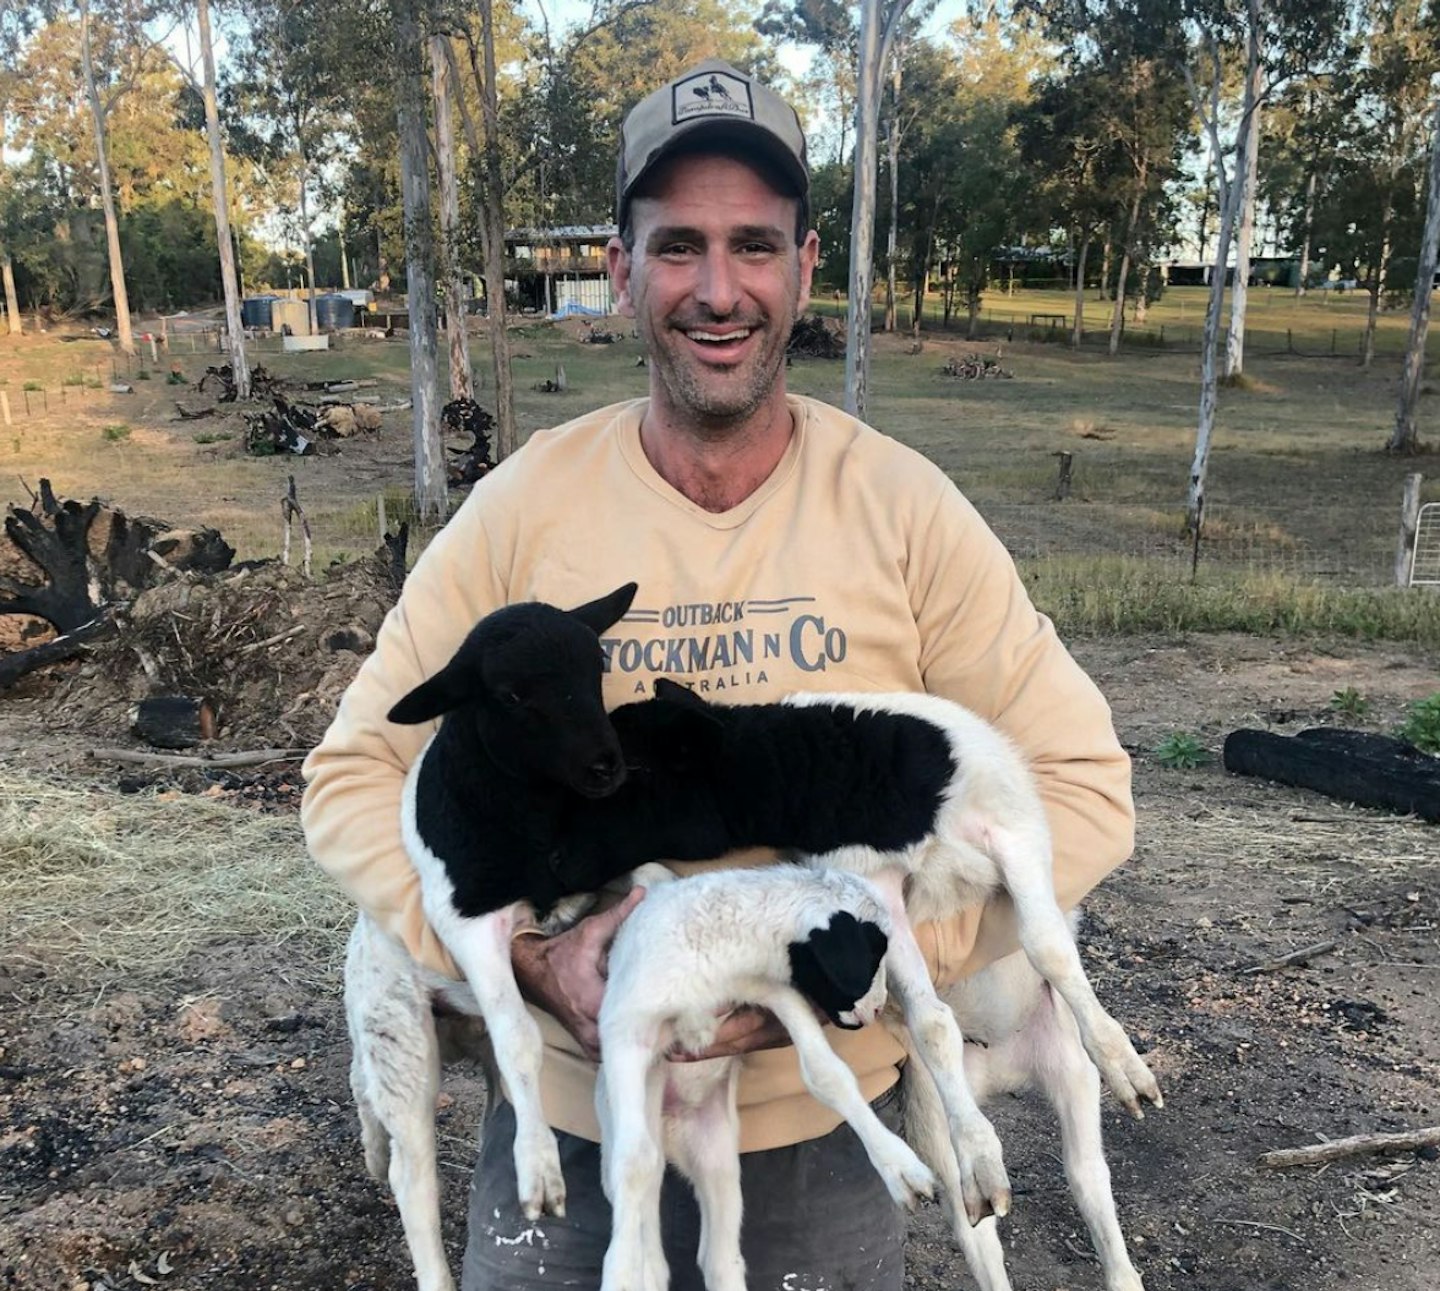 Mick Gould poses on Australian farm holding goats